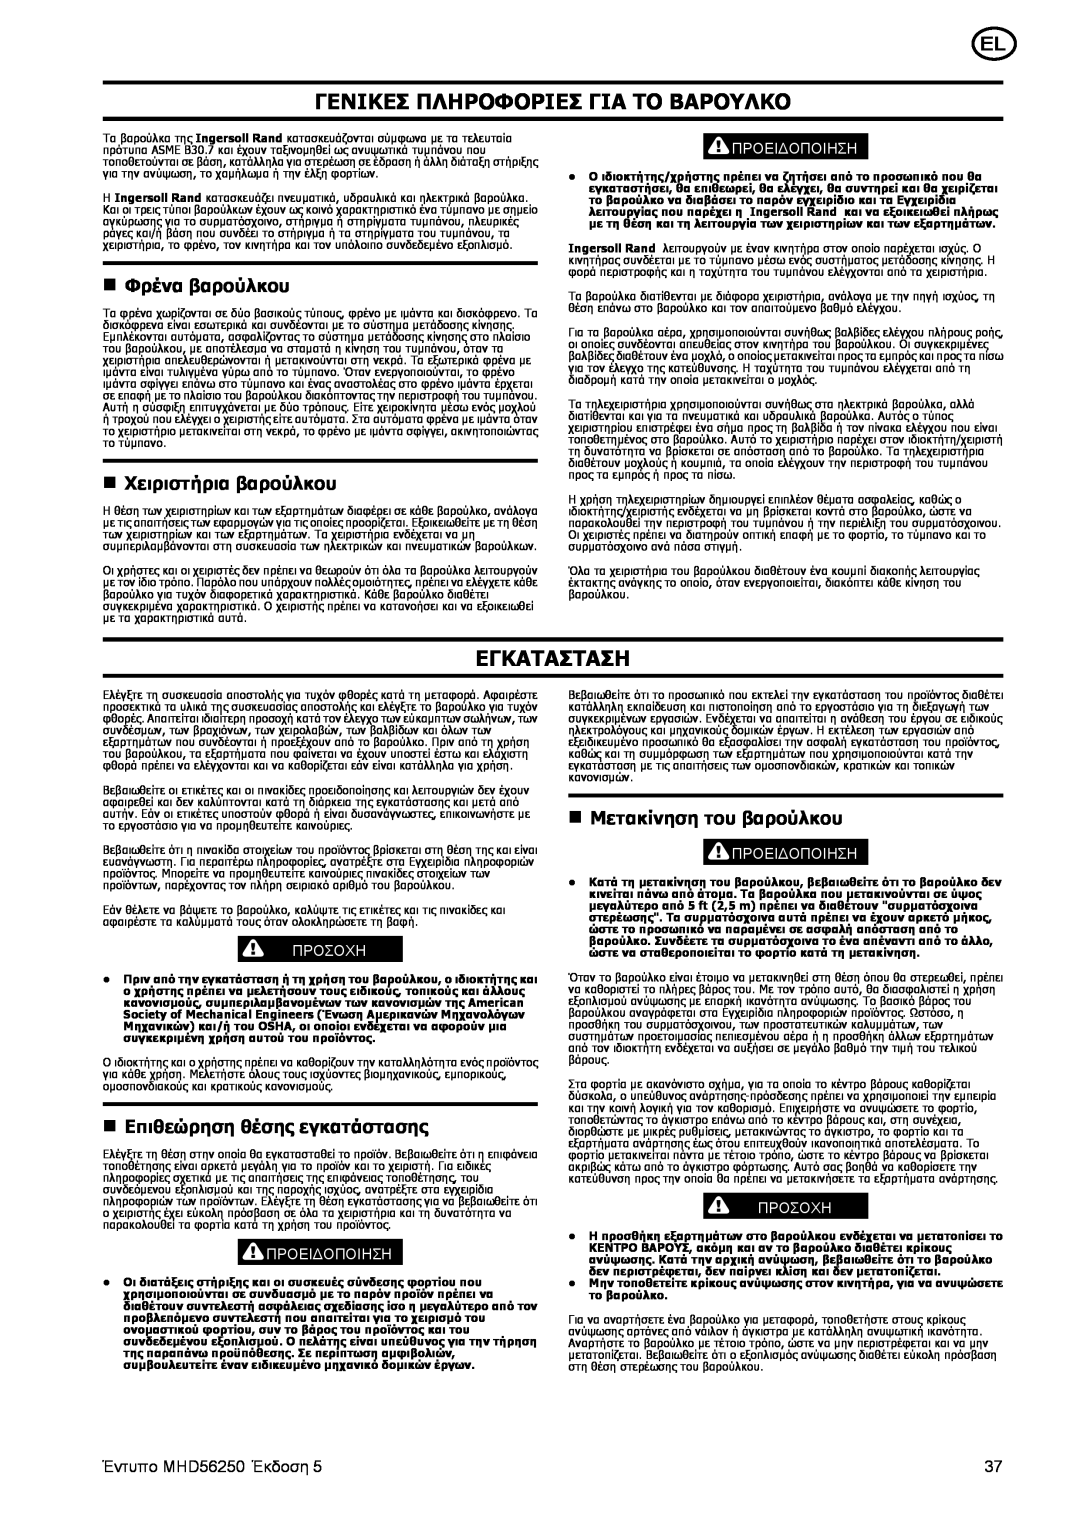 Ingersoll-Rand MHD56250 manual Γενικεσ Πληροφοριεσ Για Το Βαρουλκο, Εγκατασταση, n Φρένα βαρούλκου, n Χειριστήρια βαρούλκου 